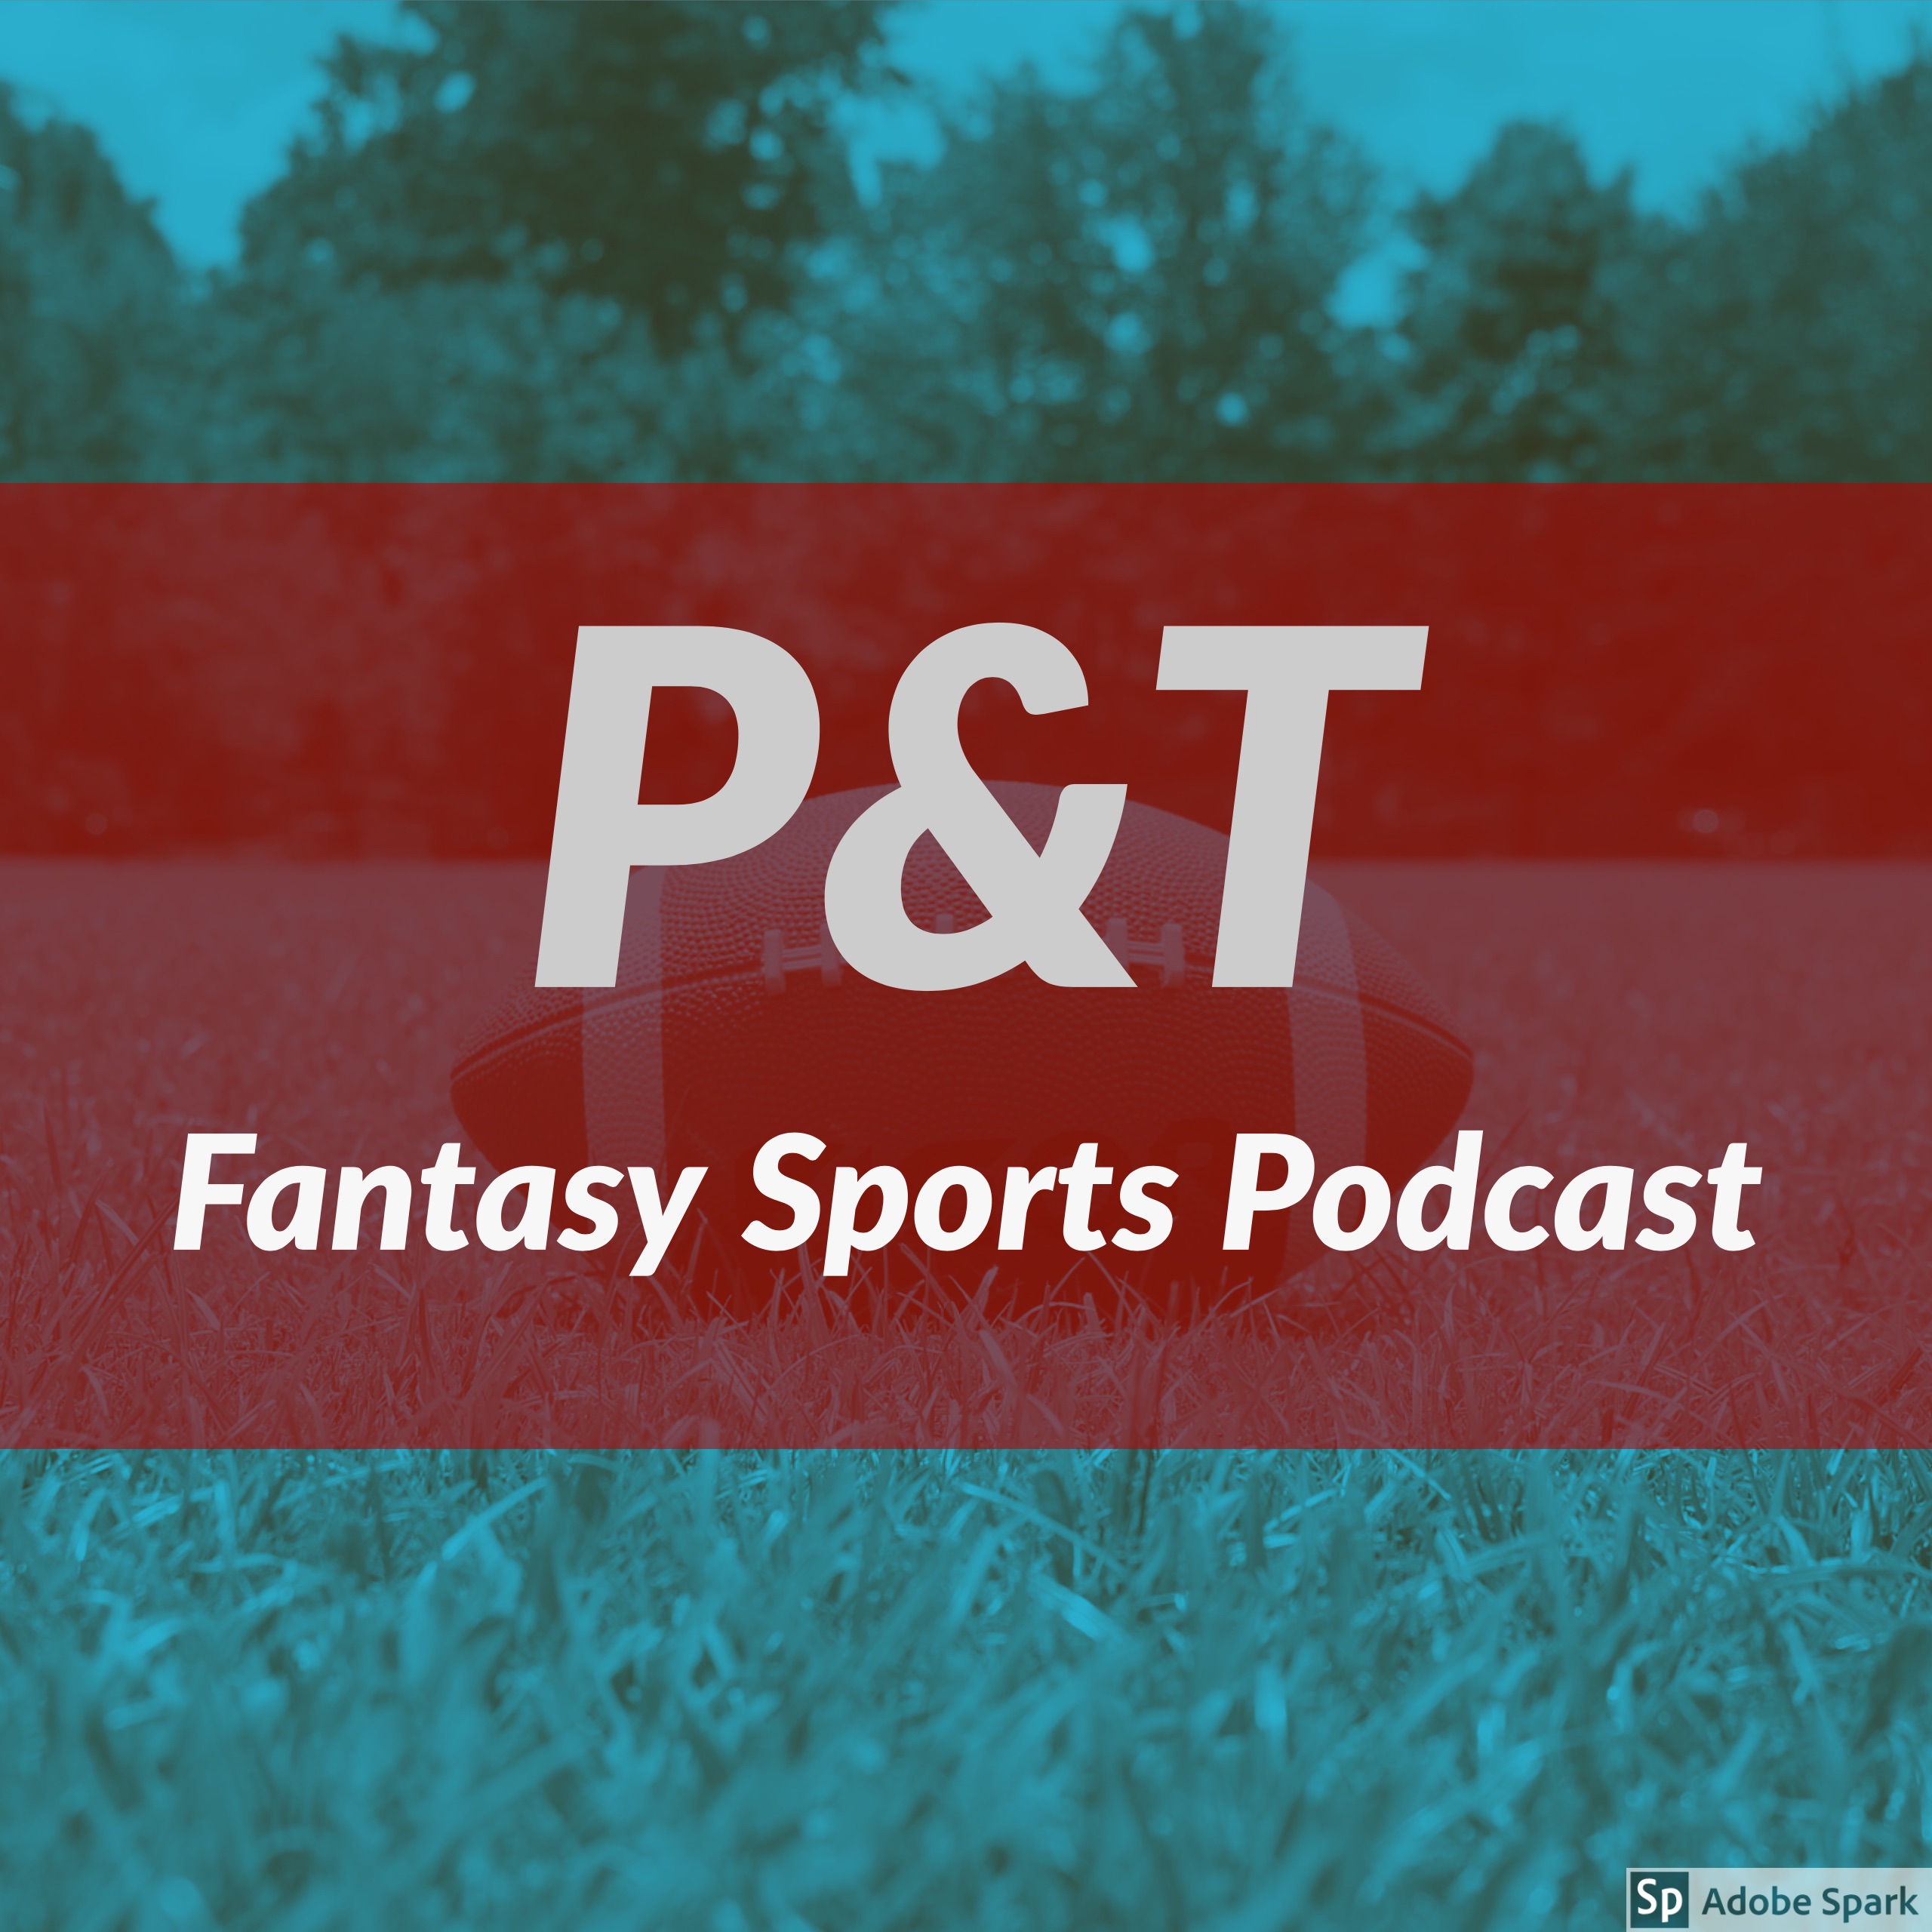 P&T Fantasy Sports Podcast